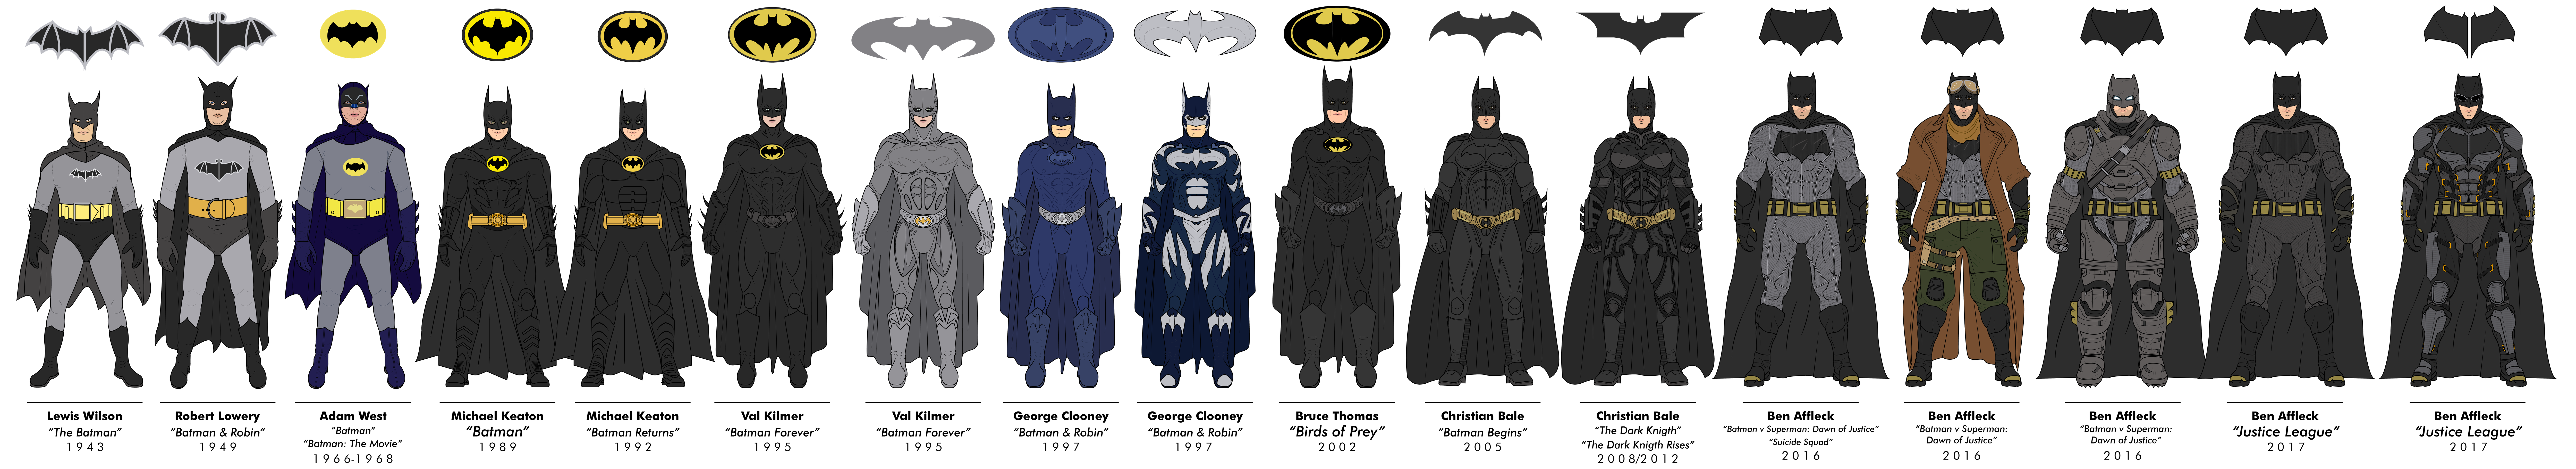 The Batman Live-Action Batsuit Evolution by efrajoey1 on DeviantArt